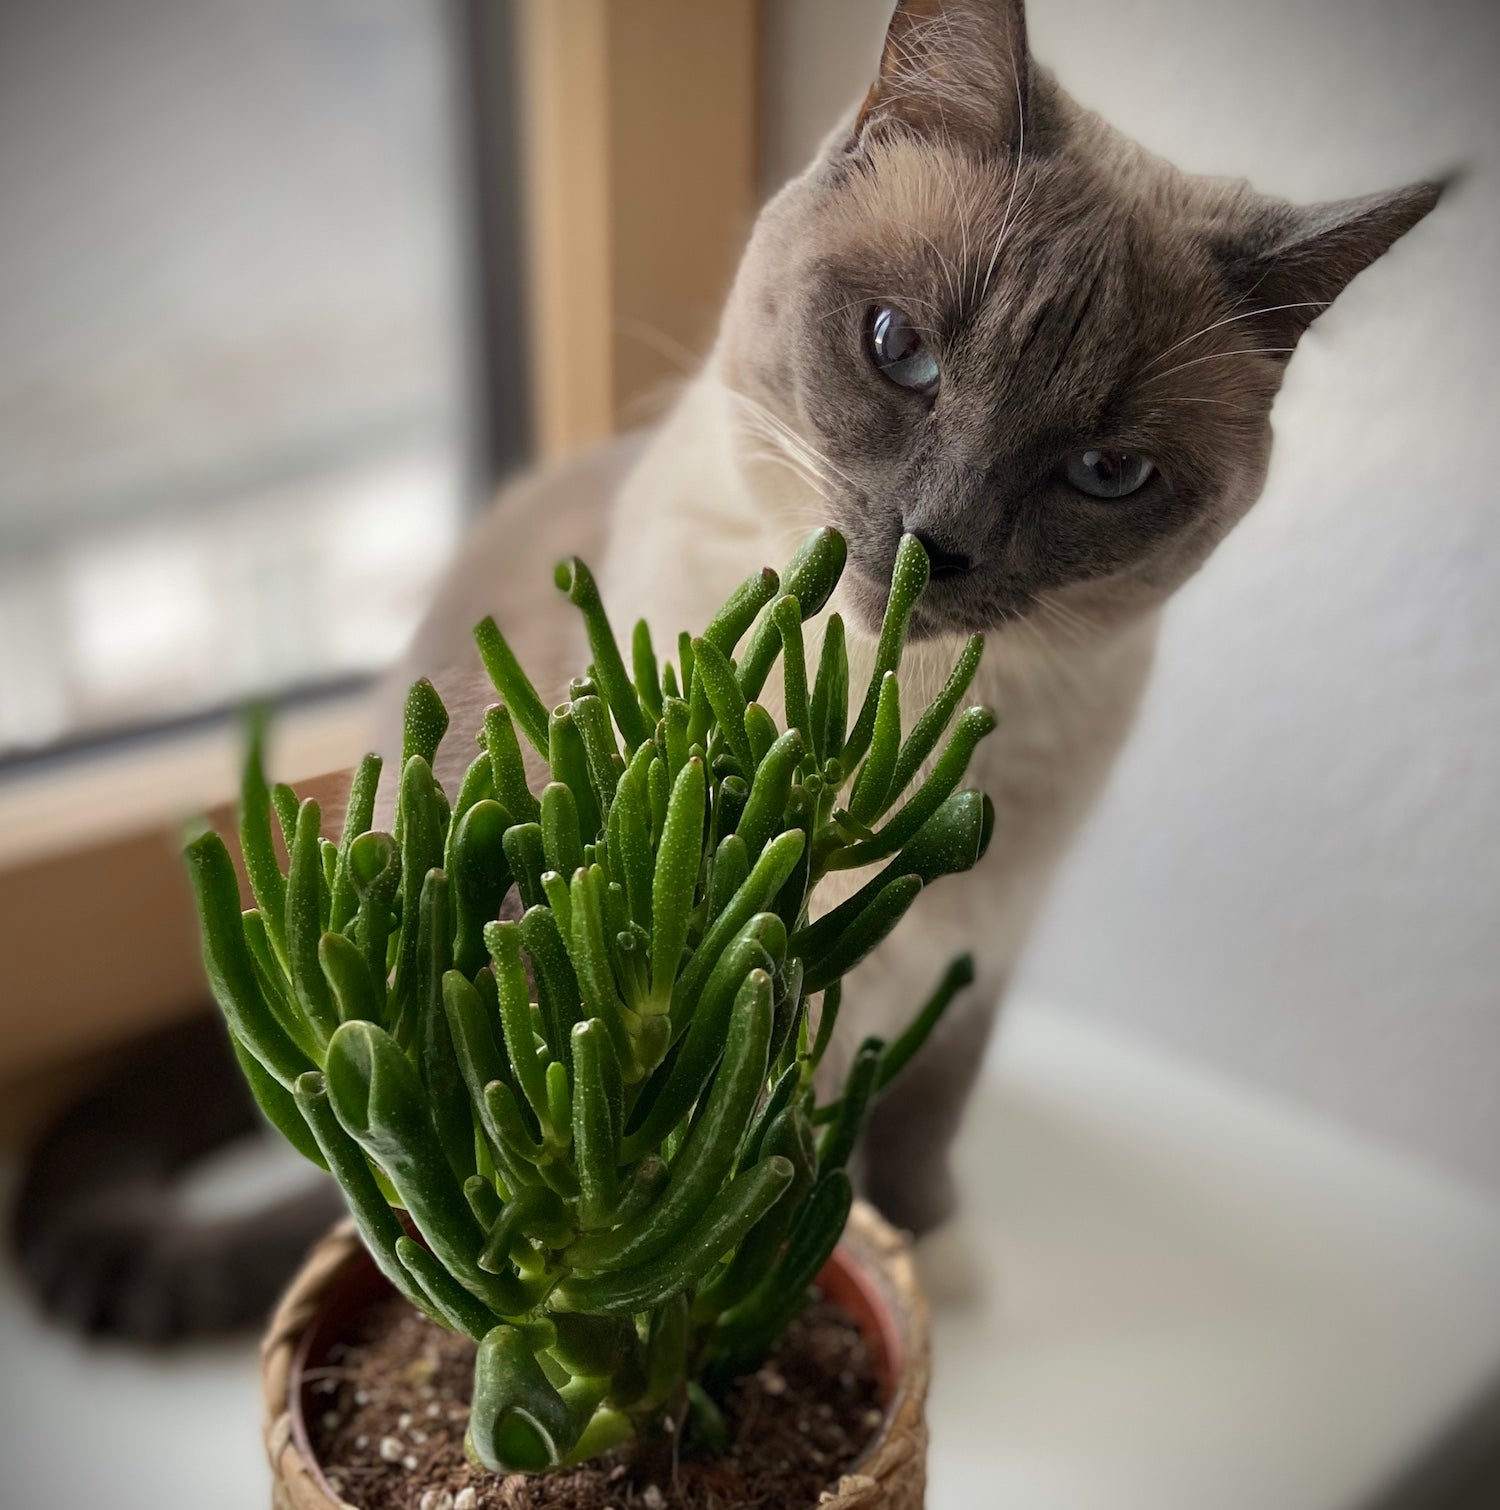 Katze beschnuppert neugierig Crassula Pflanze